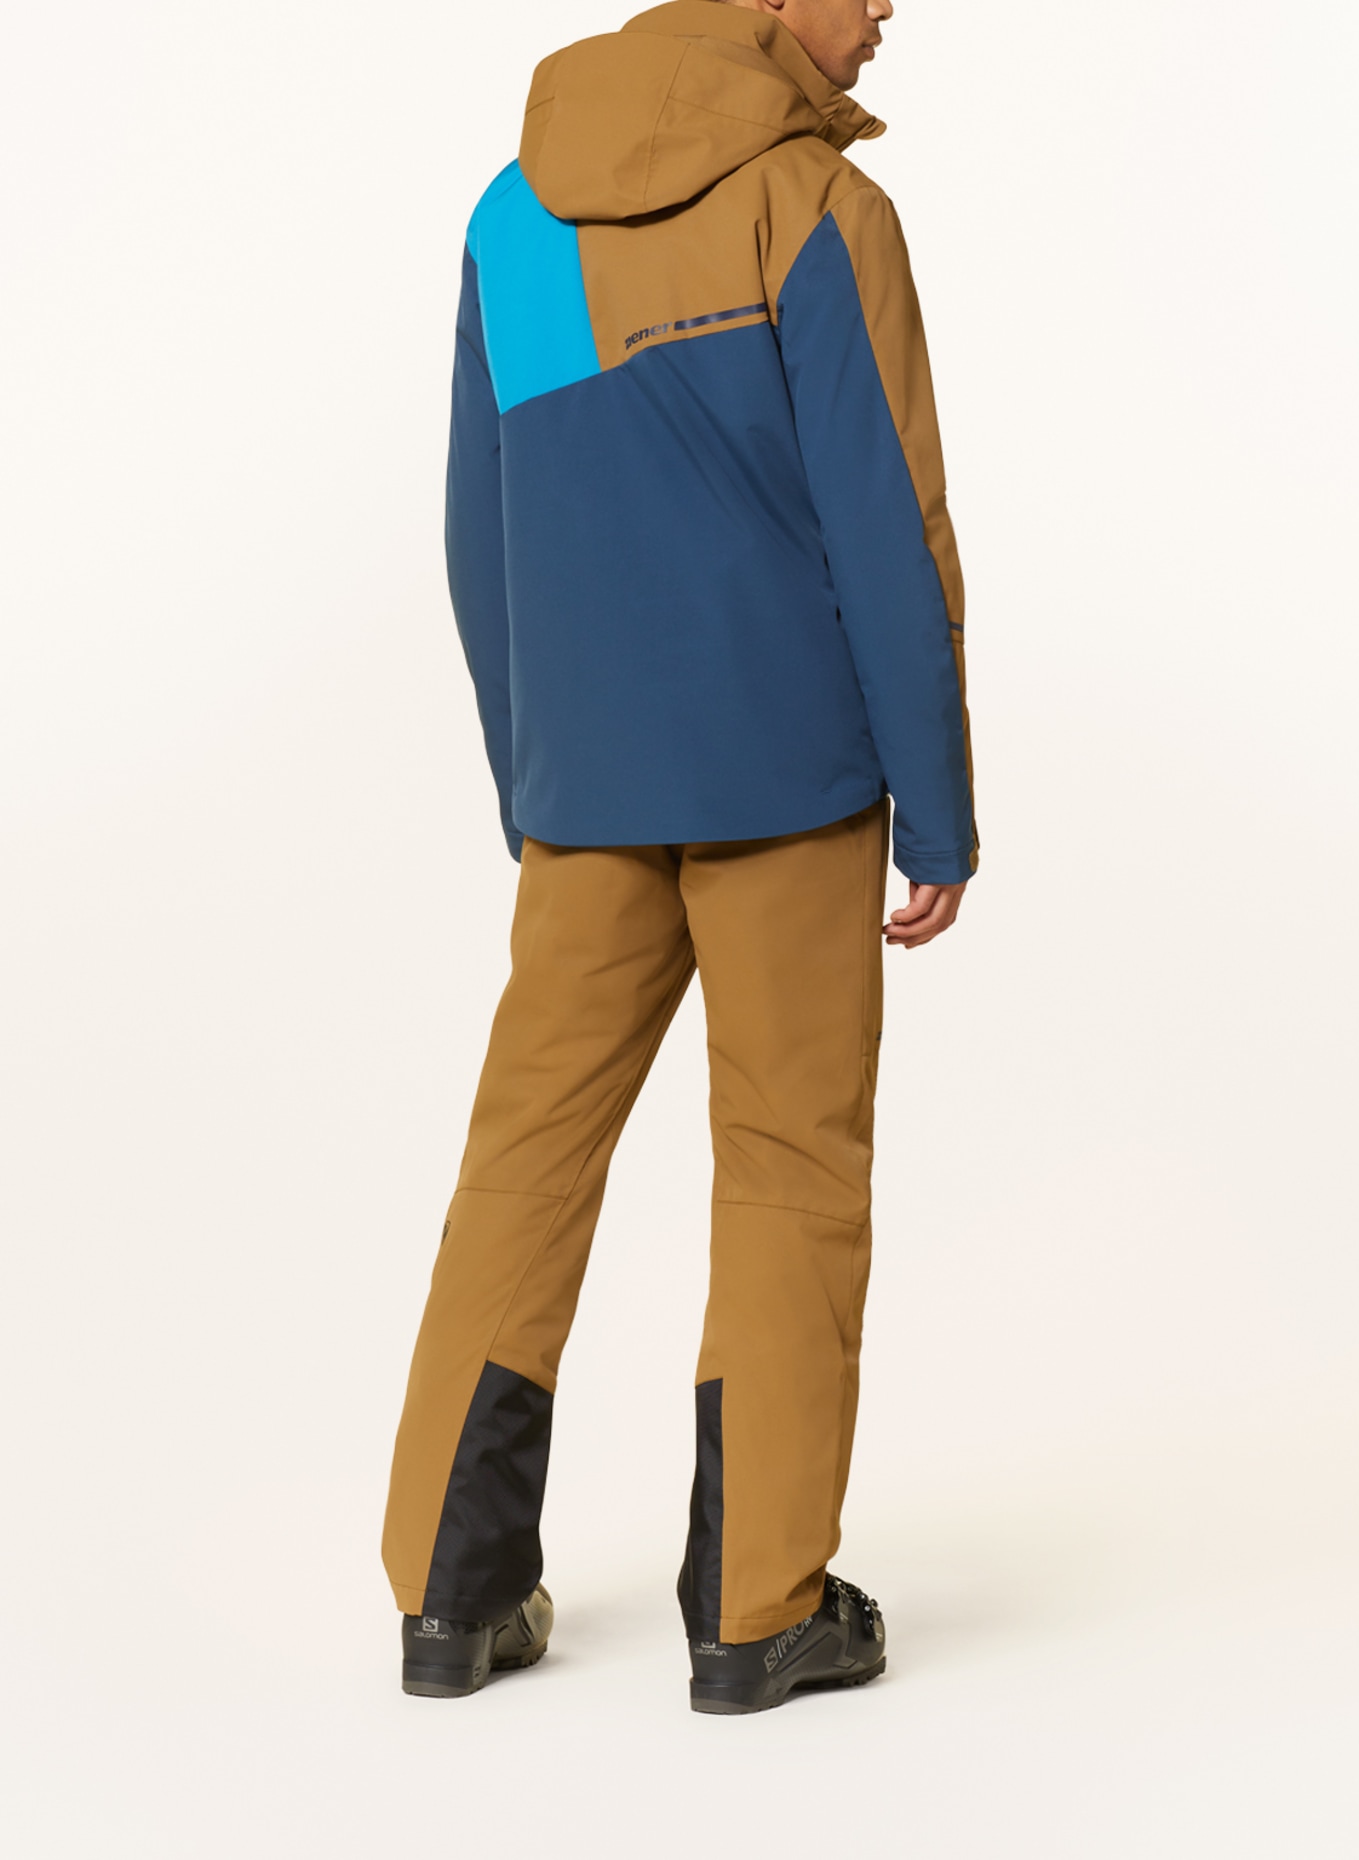 ziener Ski jacket TIMPA olive/ turquoise/ blue in dark